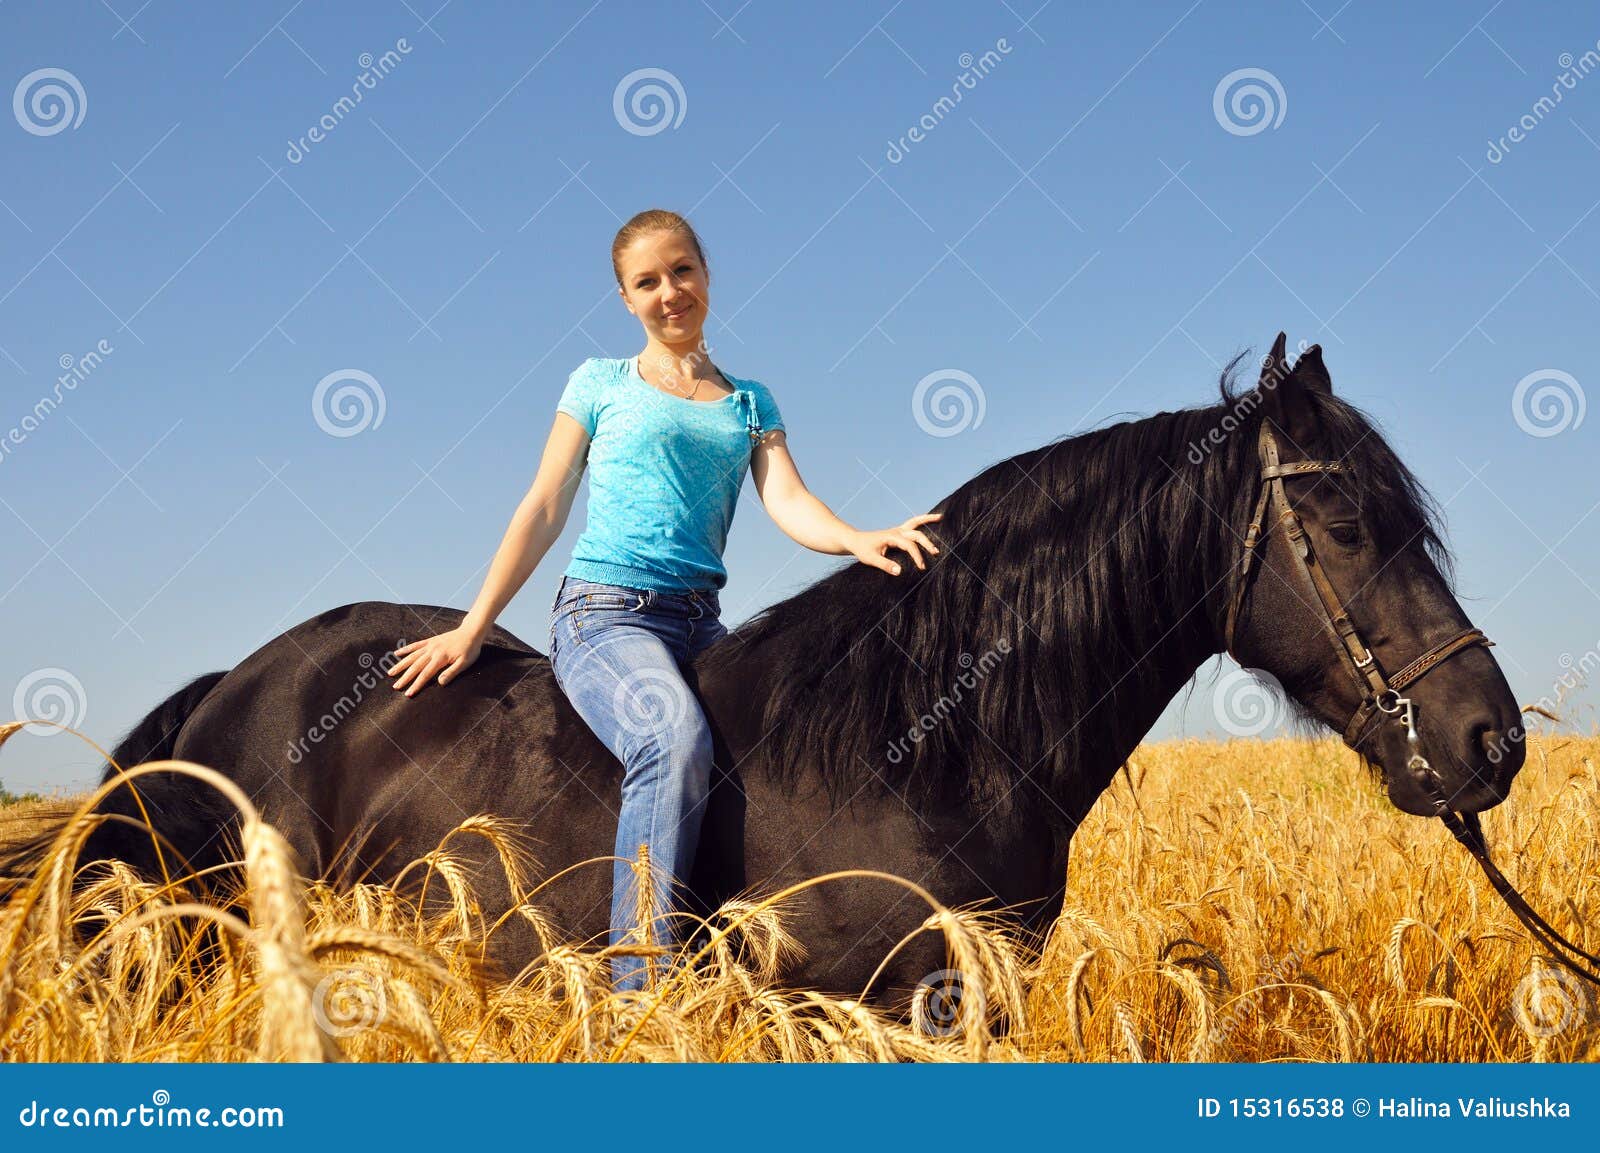 beautiful girl on horseback